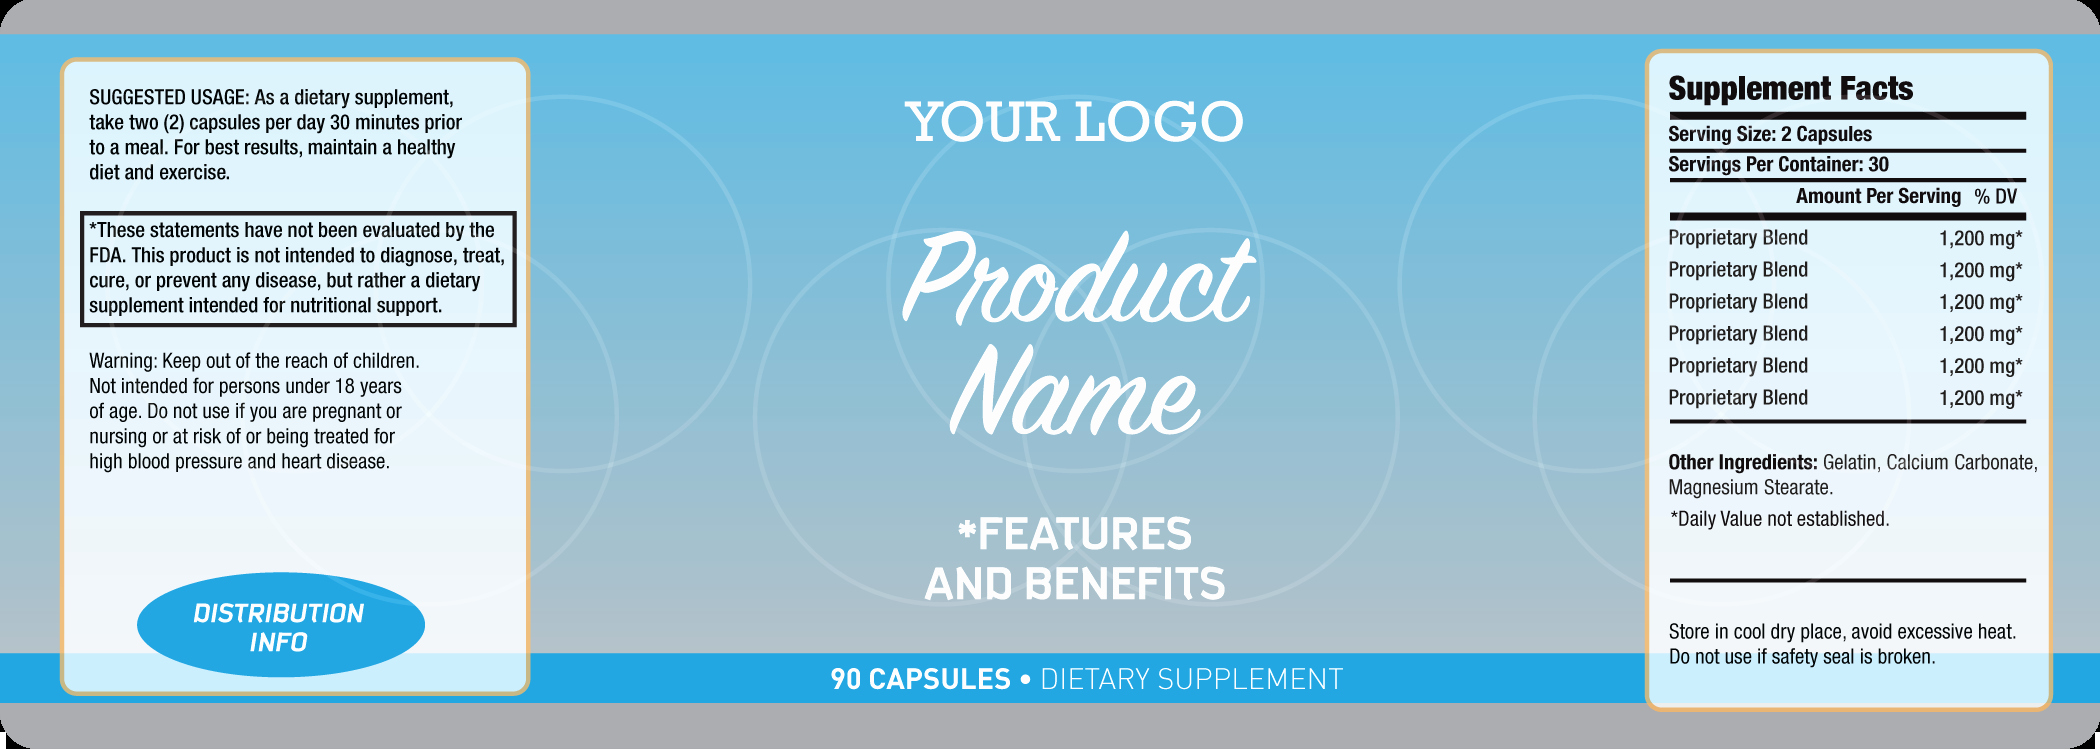 Vitamin Water Label Template Unique Private Label Supplement Labeling Services Custom White